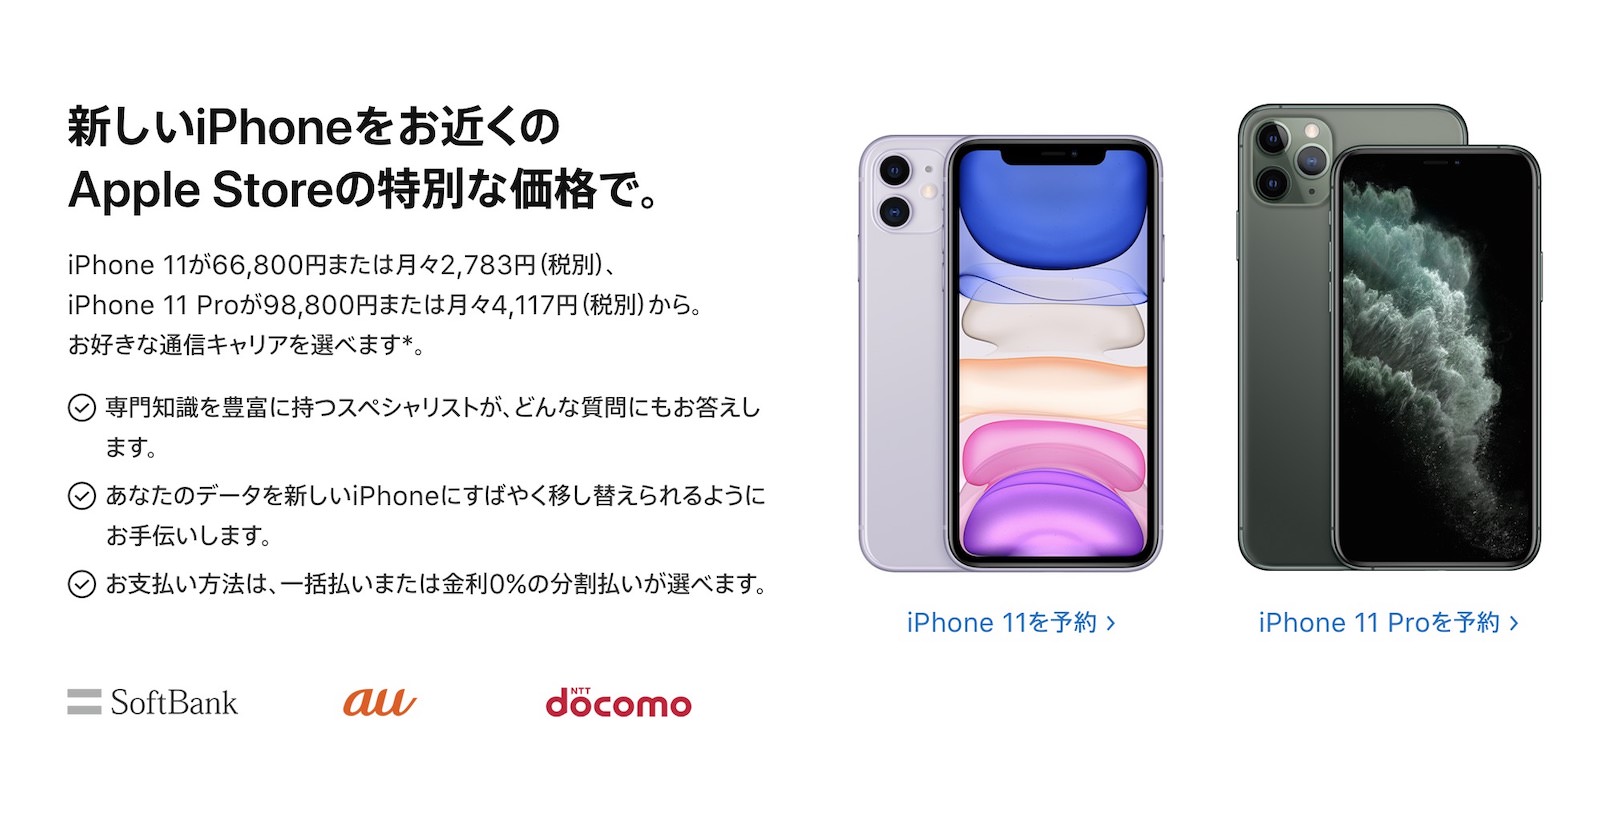 buy-iphone-at-cheaper-price-at-apple-store.jpg